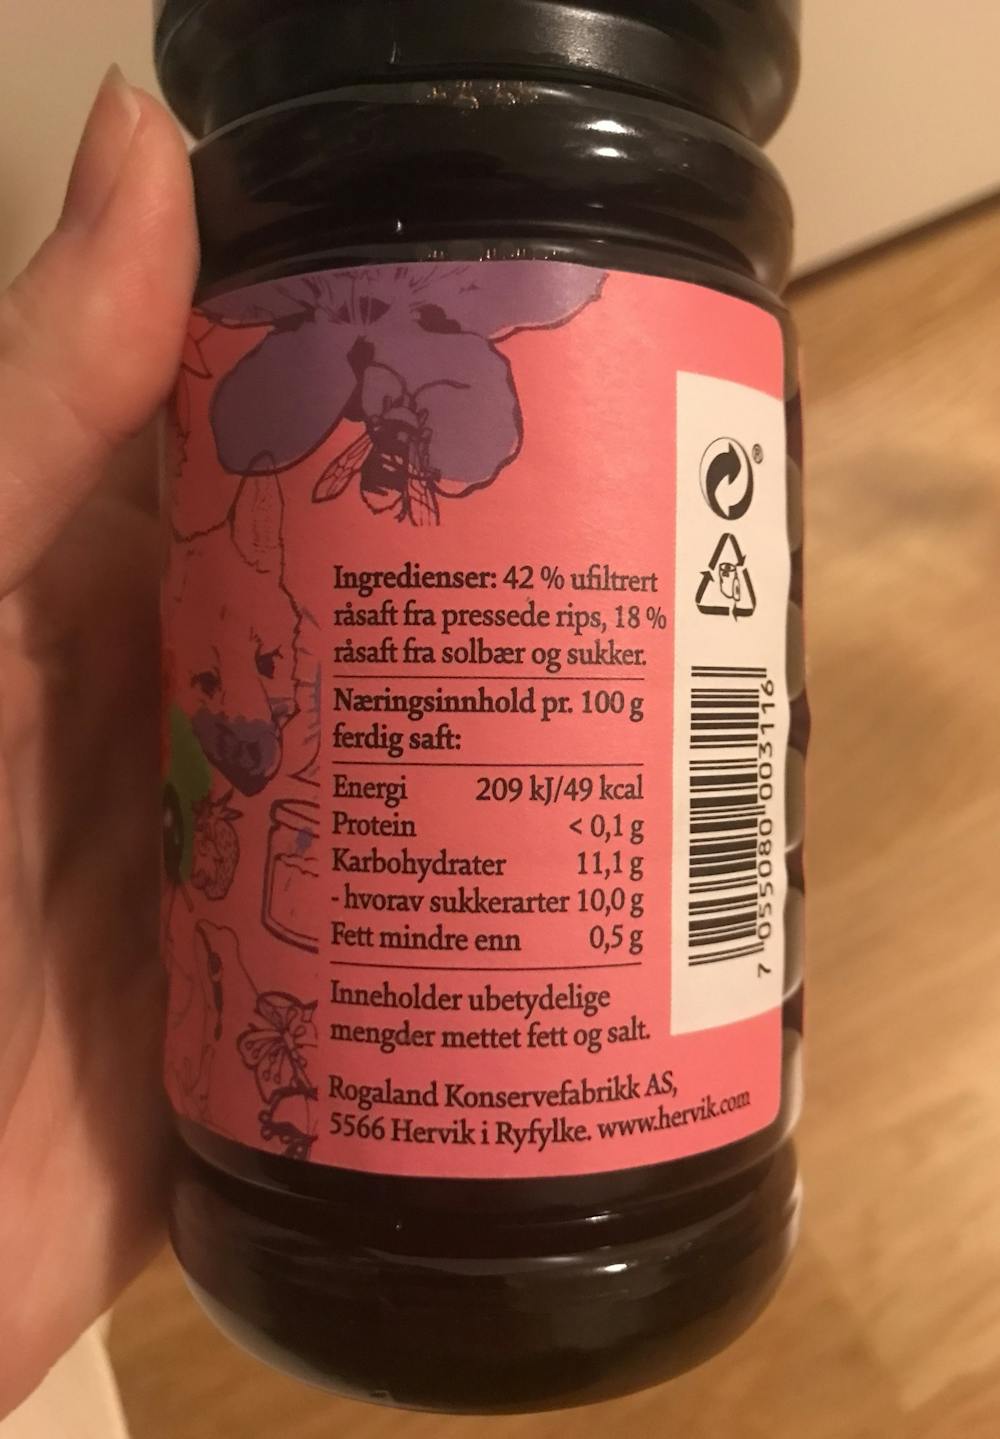 Ingredienslisten til Hervik Rips & solbærsaft